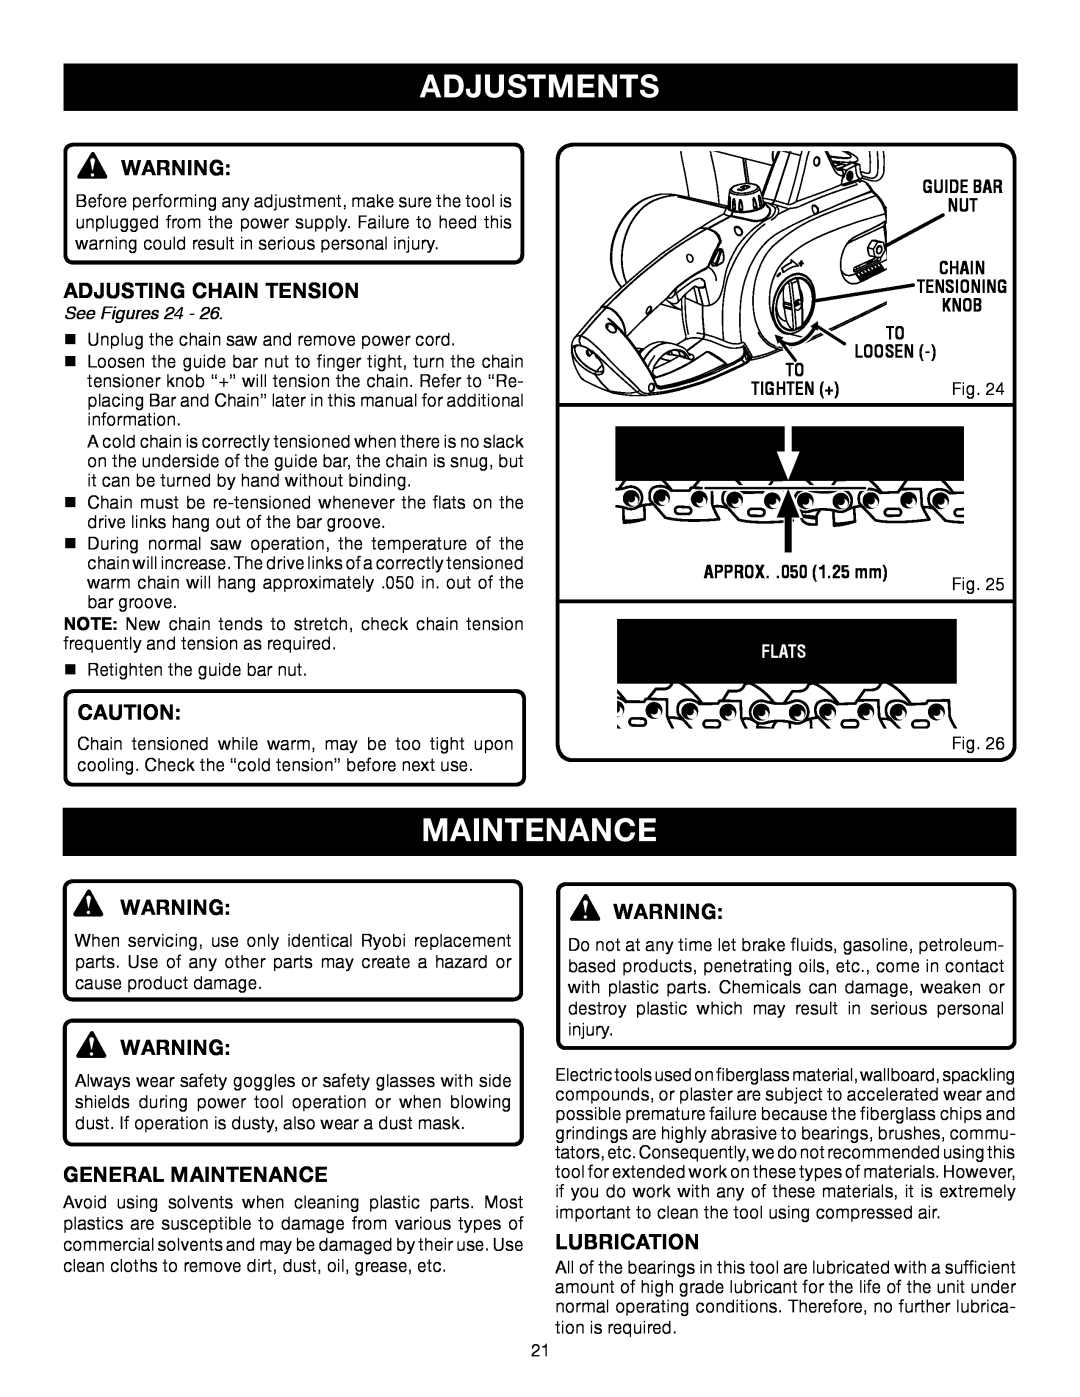 Ryobi RY43006 manual Adjustments, Adjusting Chain Tension, General Maintenance, Lubrication, See Figures, Flats 